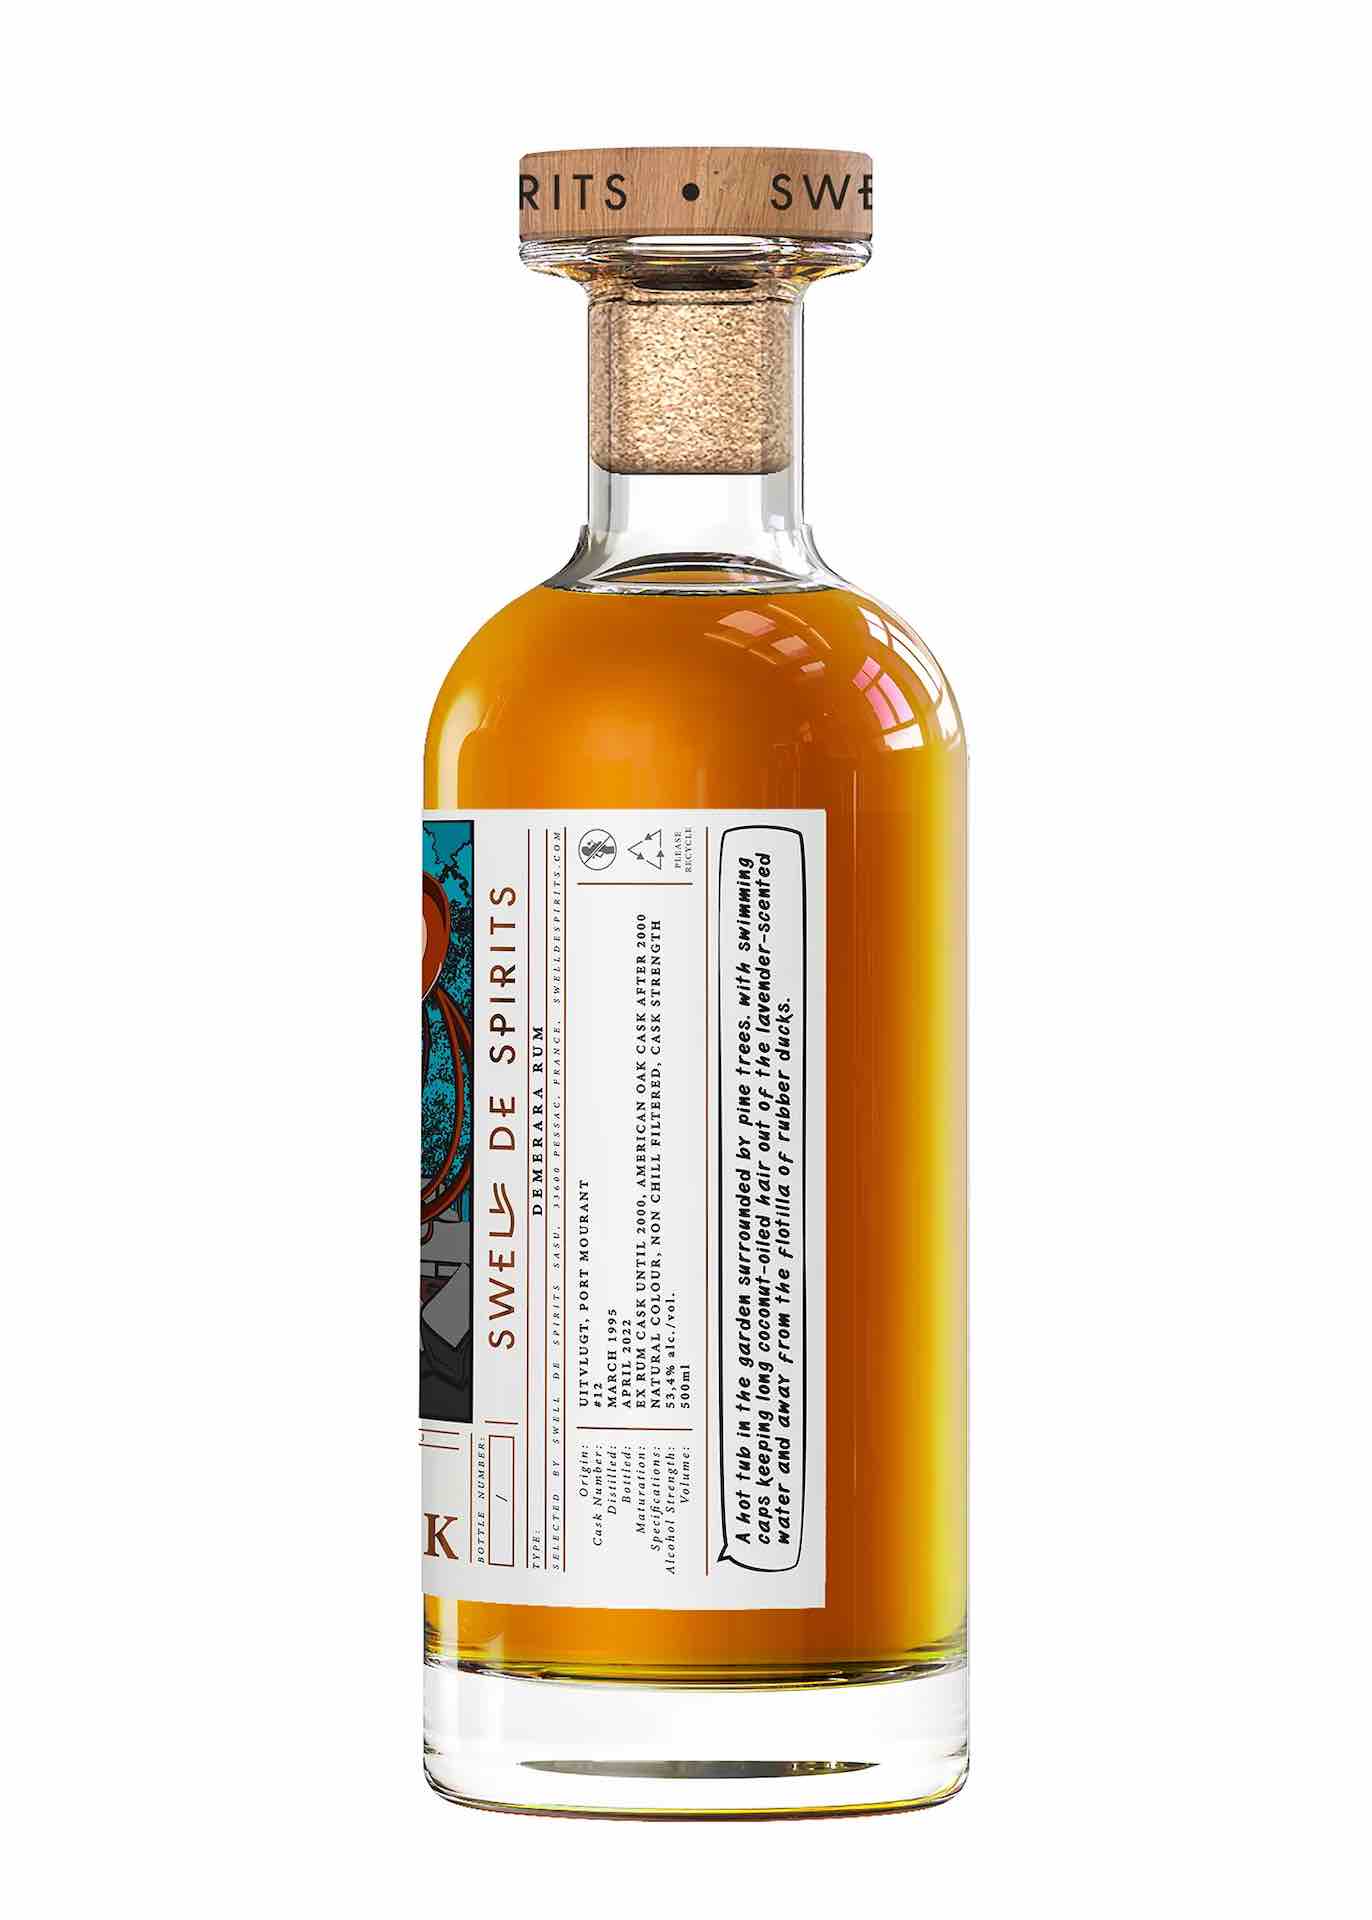 Swell De Spirits Uitvlugt Port Mourant 27 Year Old Rum